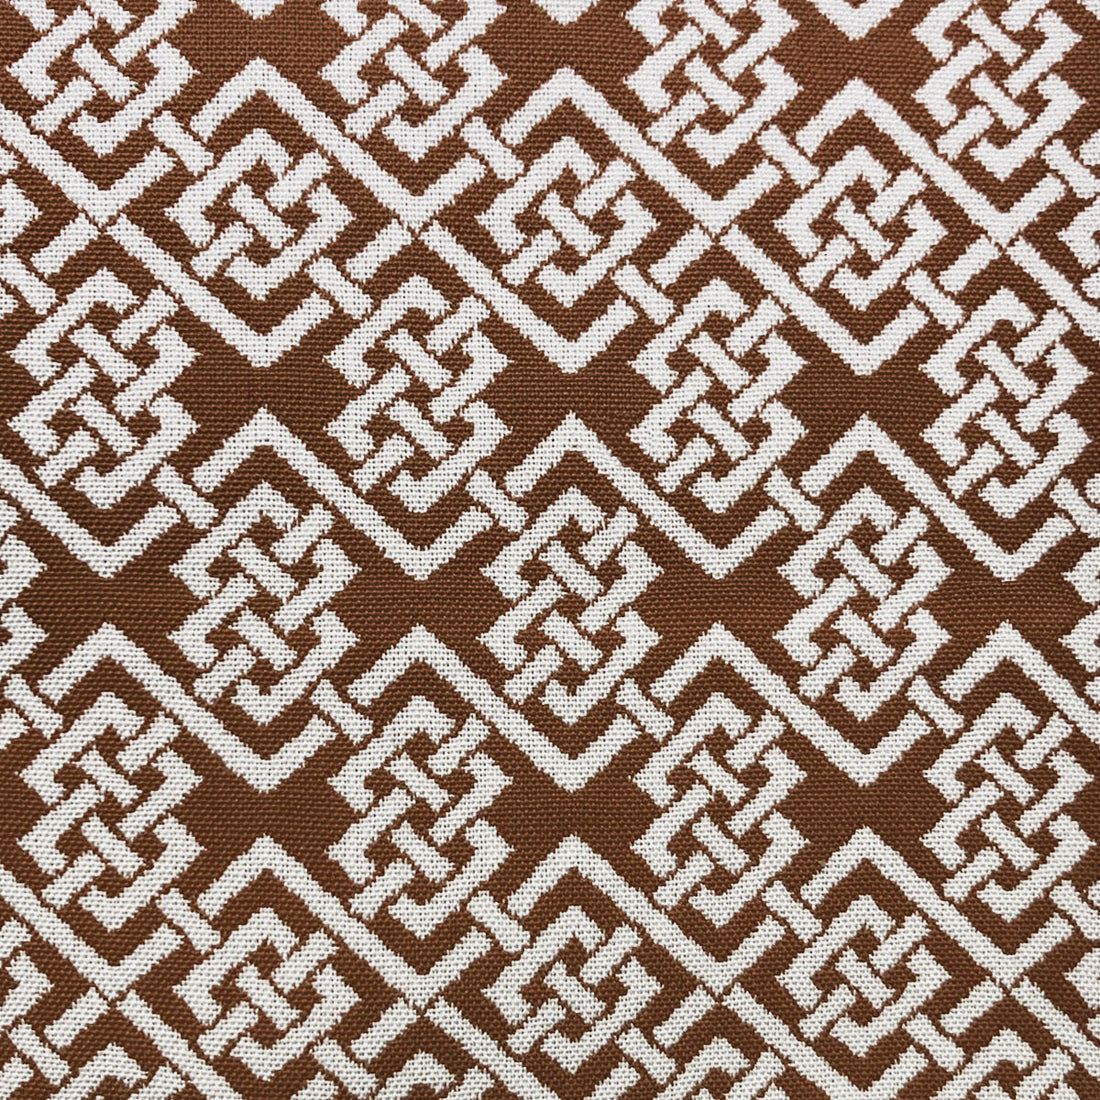 Ephraim fabric in tabaco color - pattern LCT1055.002.0 - by Gaston y Daniela in the Lorenzo Castillo VI collection